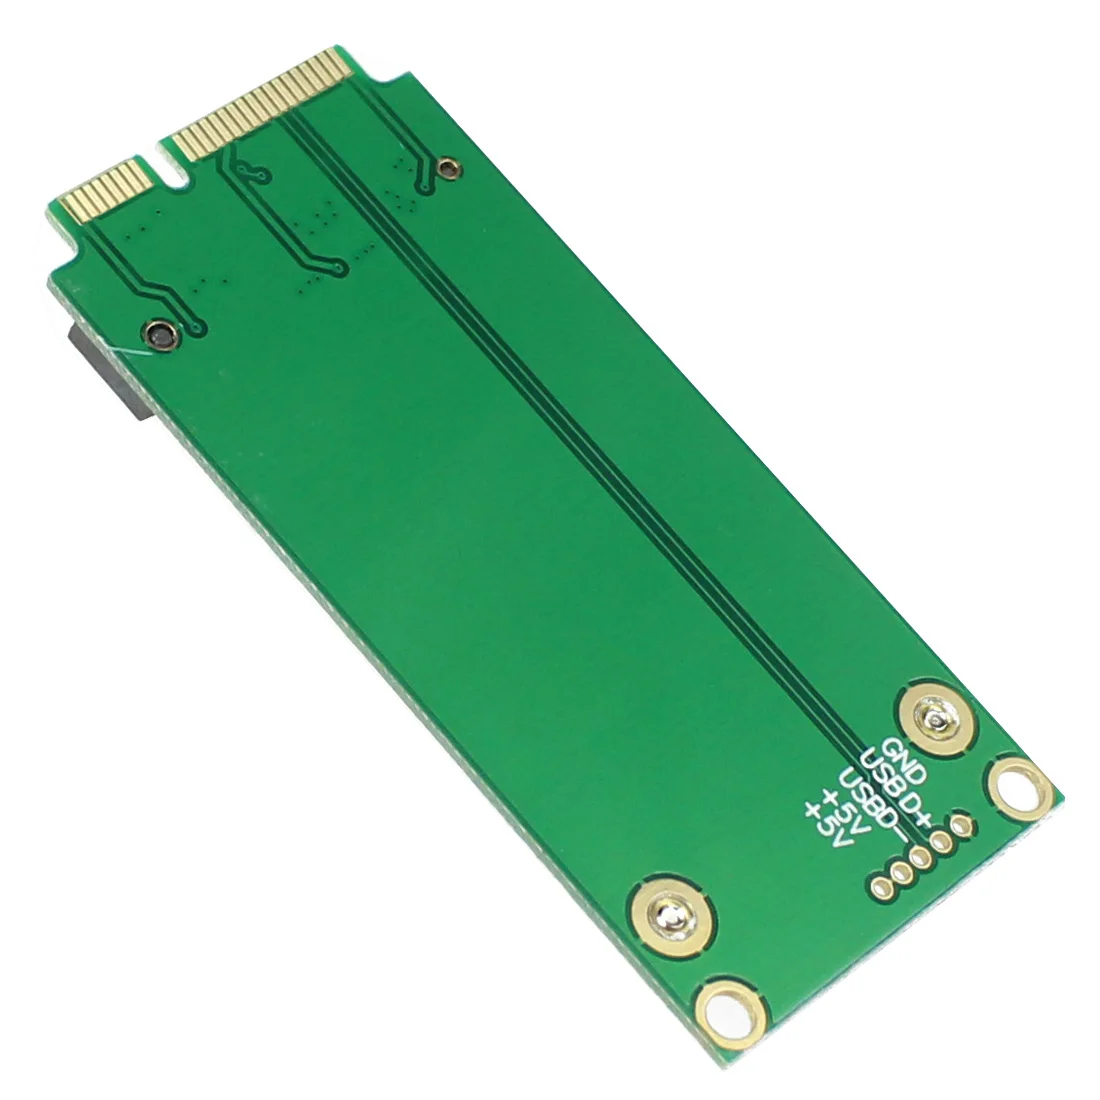 mSATA Адаптер к Mini PCI-e SATA SSD Адаптер Конвертер Карты для Asus Eee PC 1000 S101 900 901 900A T91 3x5 см - 4